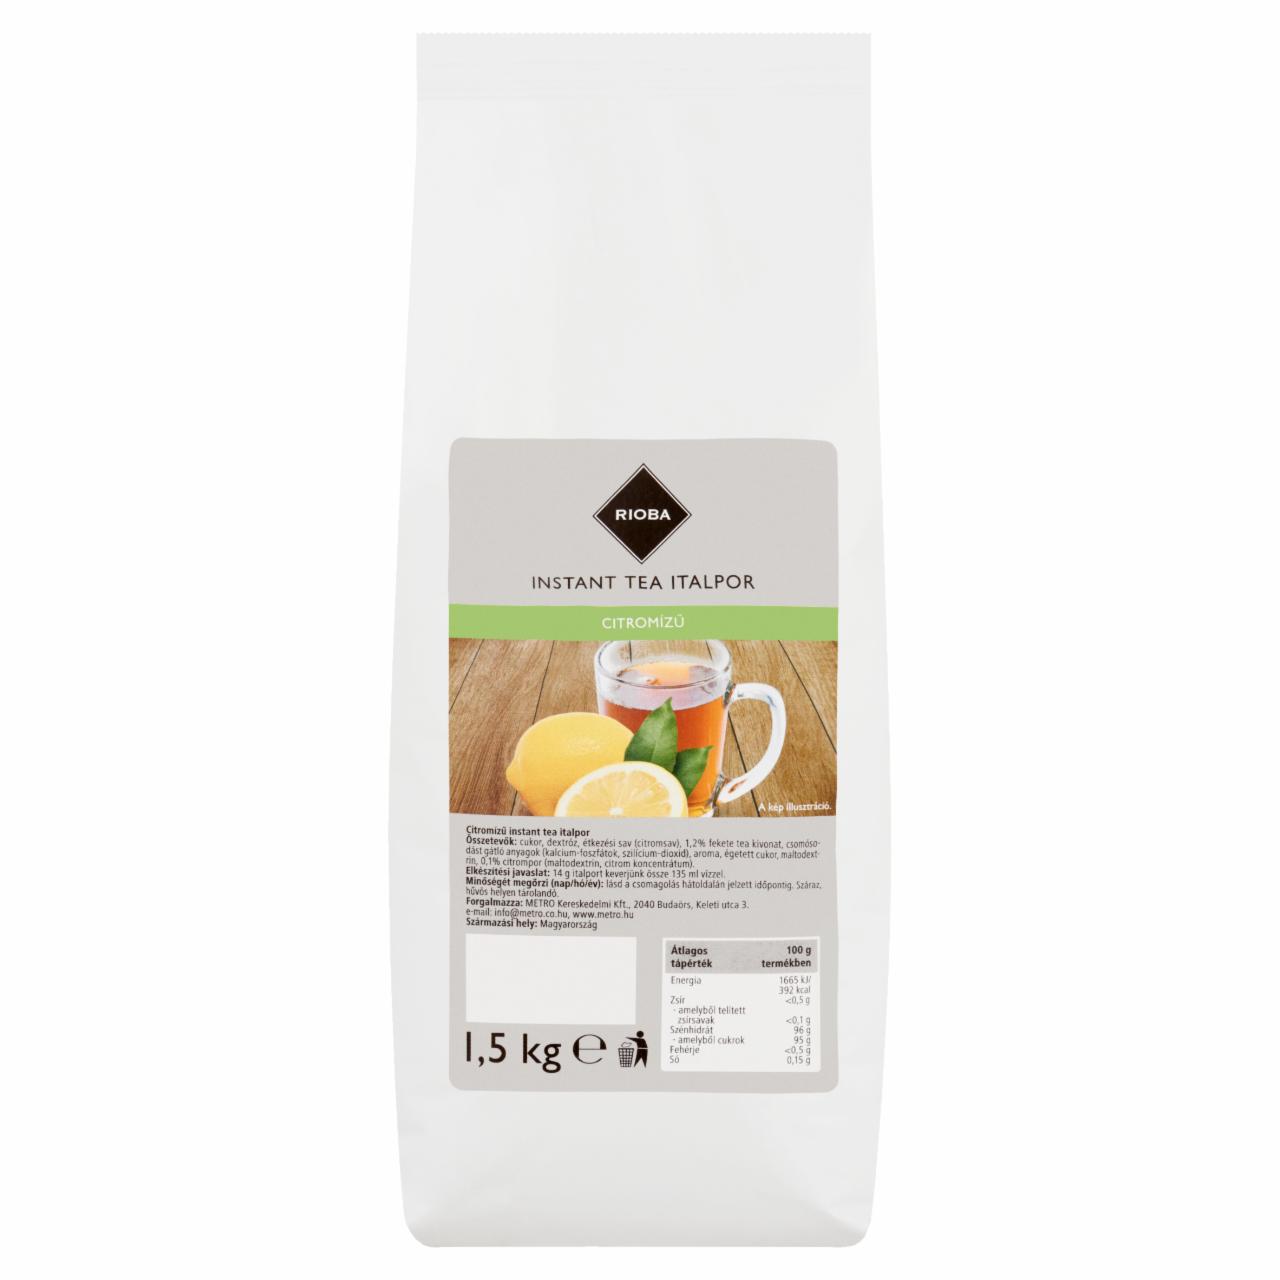 Képek - Rioba citromízű instant tea italpor 1,5 kg